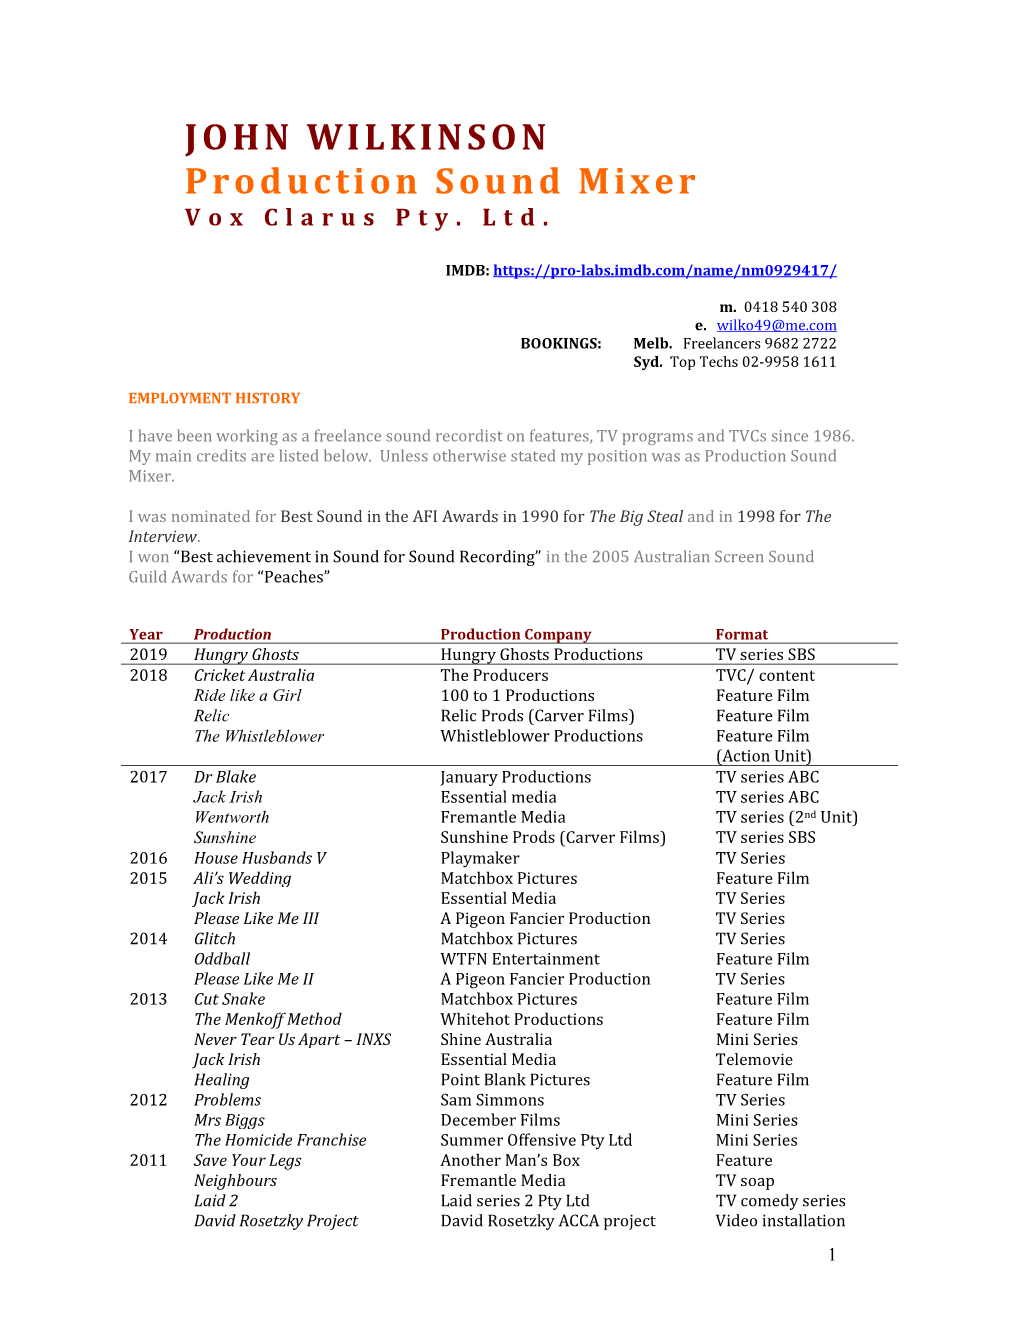 JOHN WILKINSON Production Sound Mixer Vox Clarus Pty